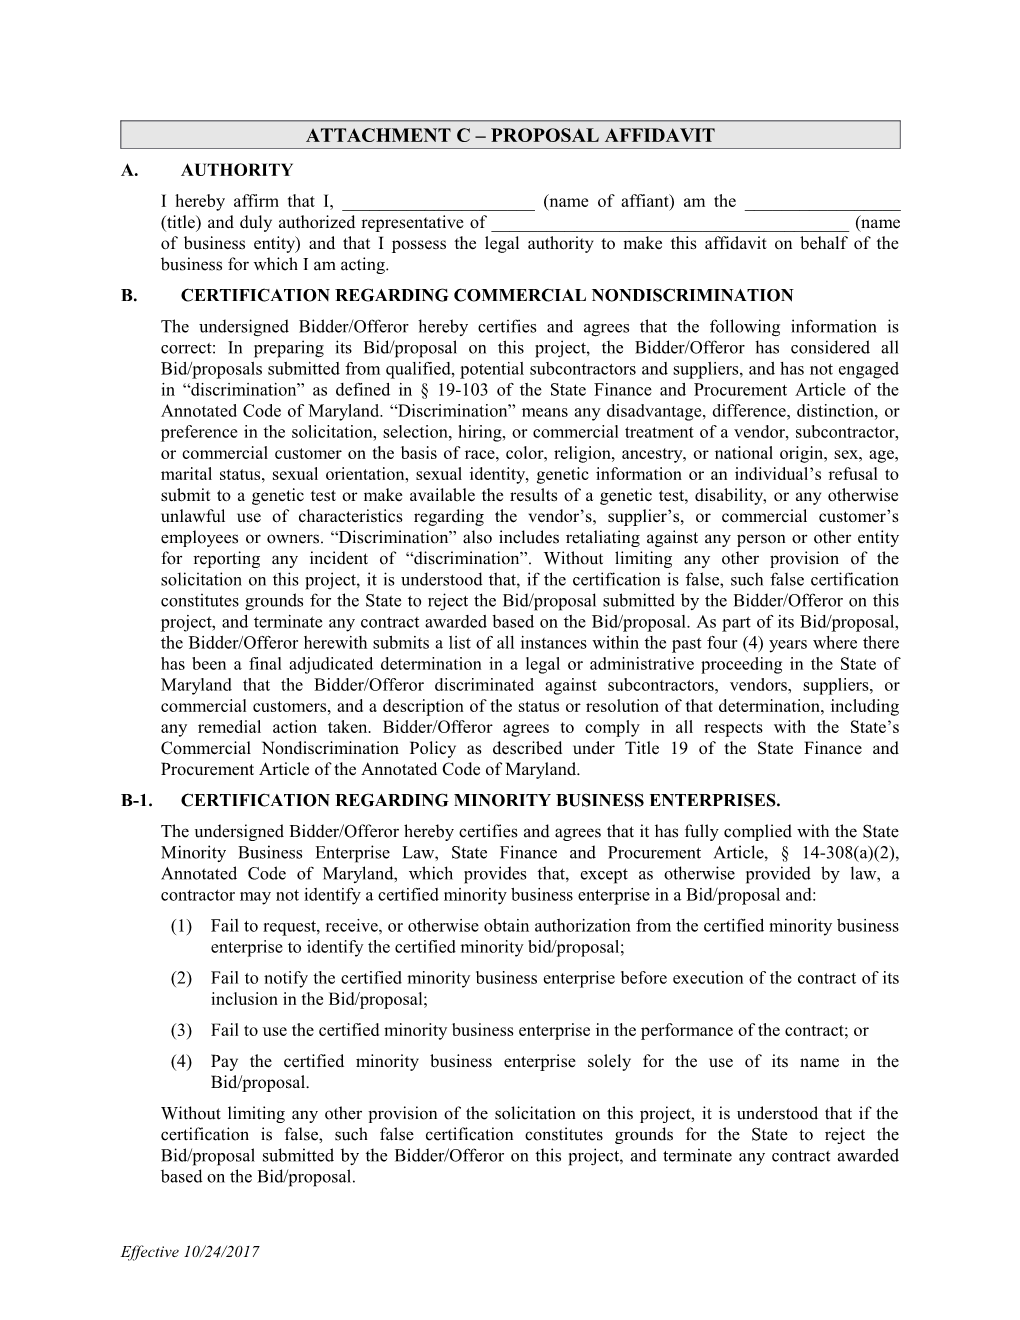 B.Certification Regarding Commercial Nondiscrimination